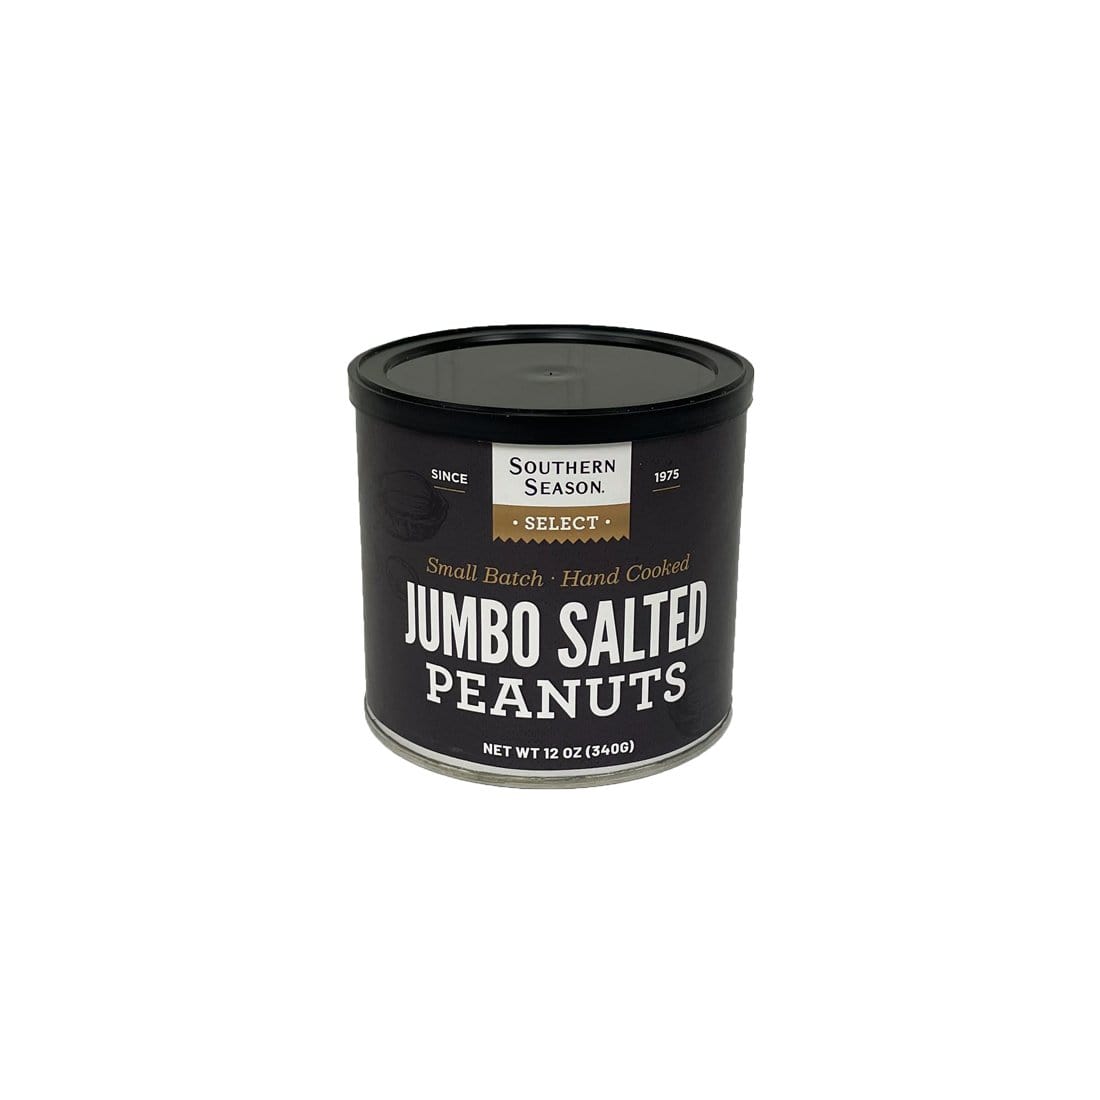 Southern Season Southern Season Select Hand Cooked Jumbo Salted Peanuts